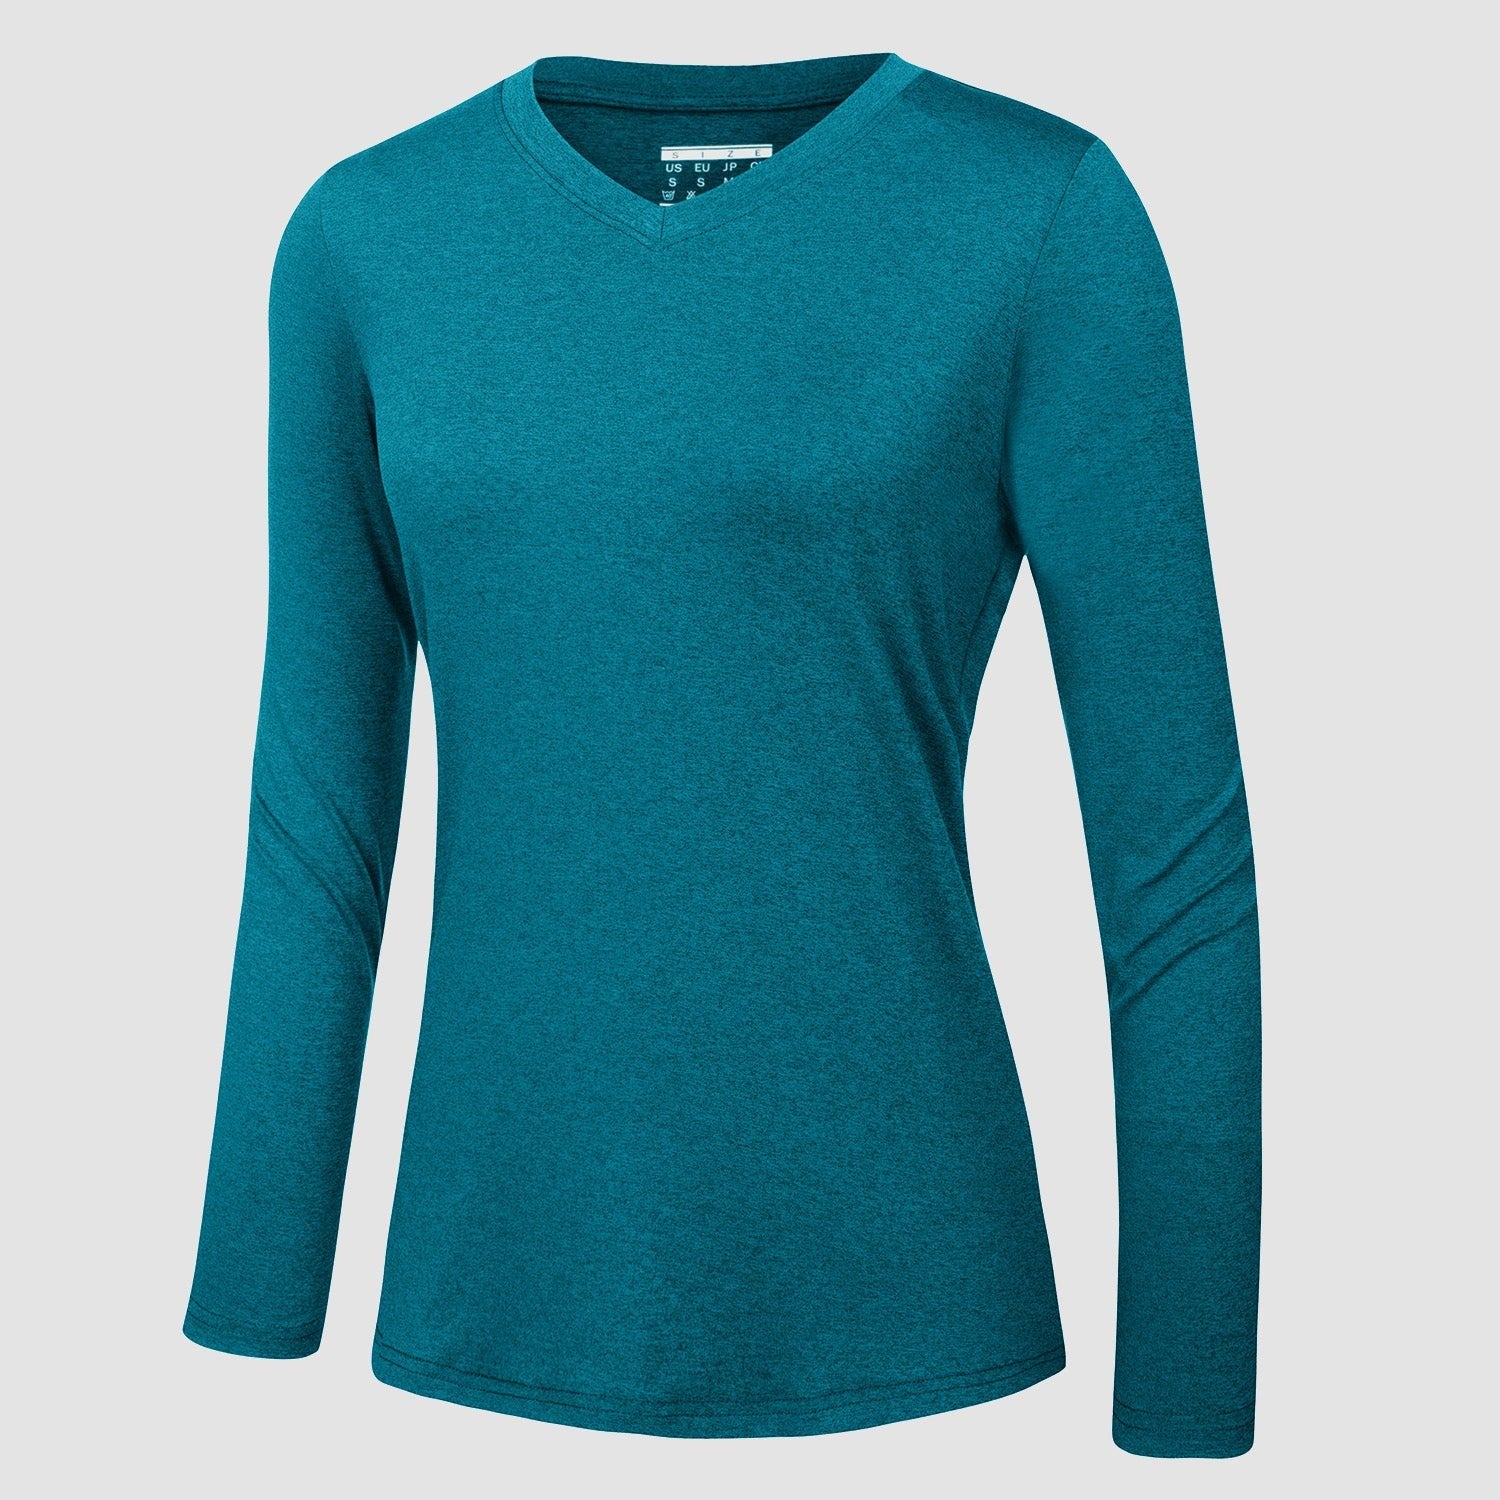 Women's Long Sleeve Shirt V Neck SPF Shirts UPF 50+ Quick Dry Workout Hiking Tee Shirts Rashguard, Peacock Blue / XL